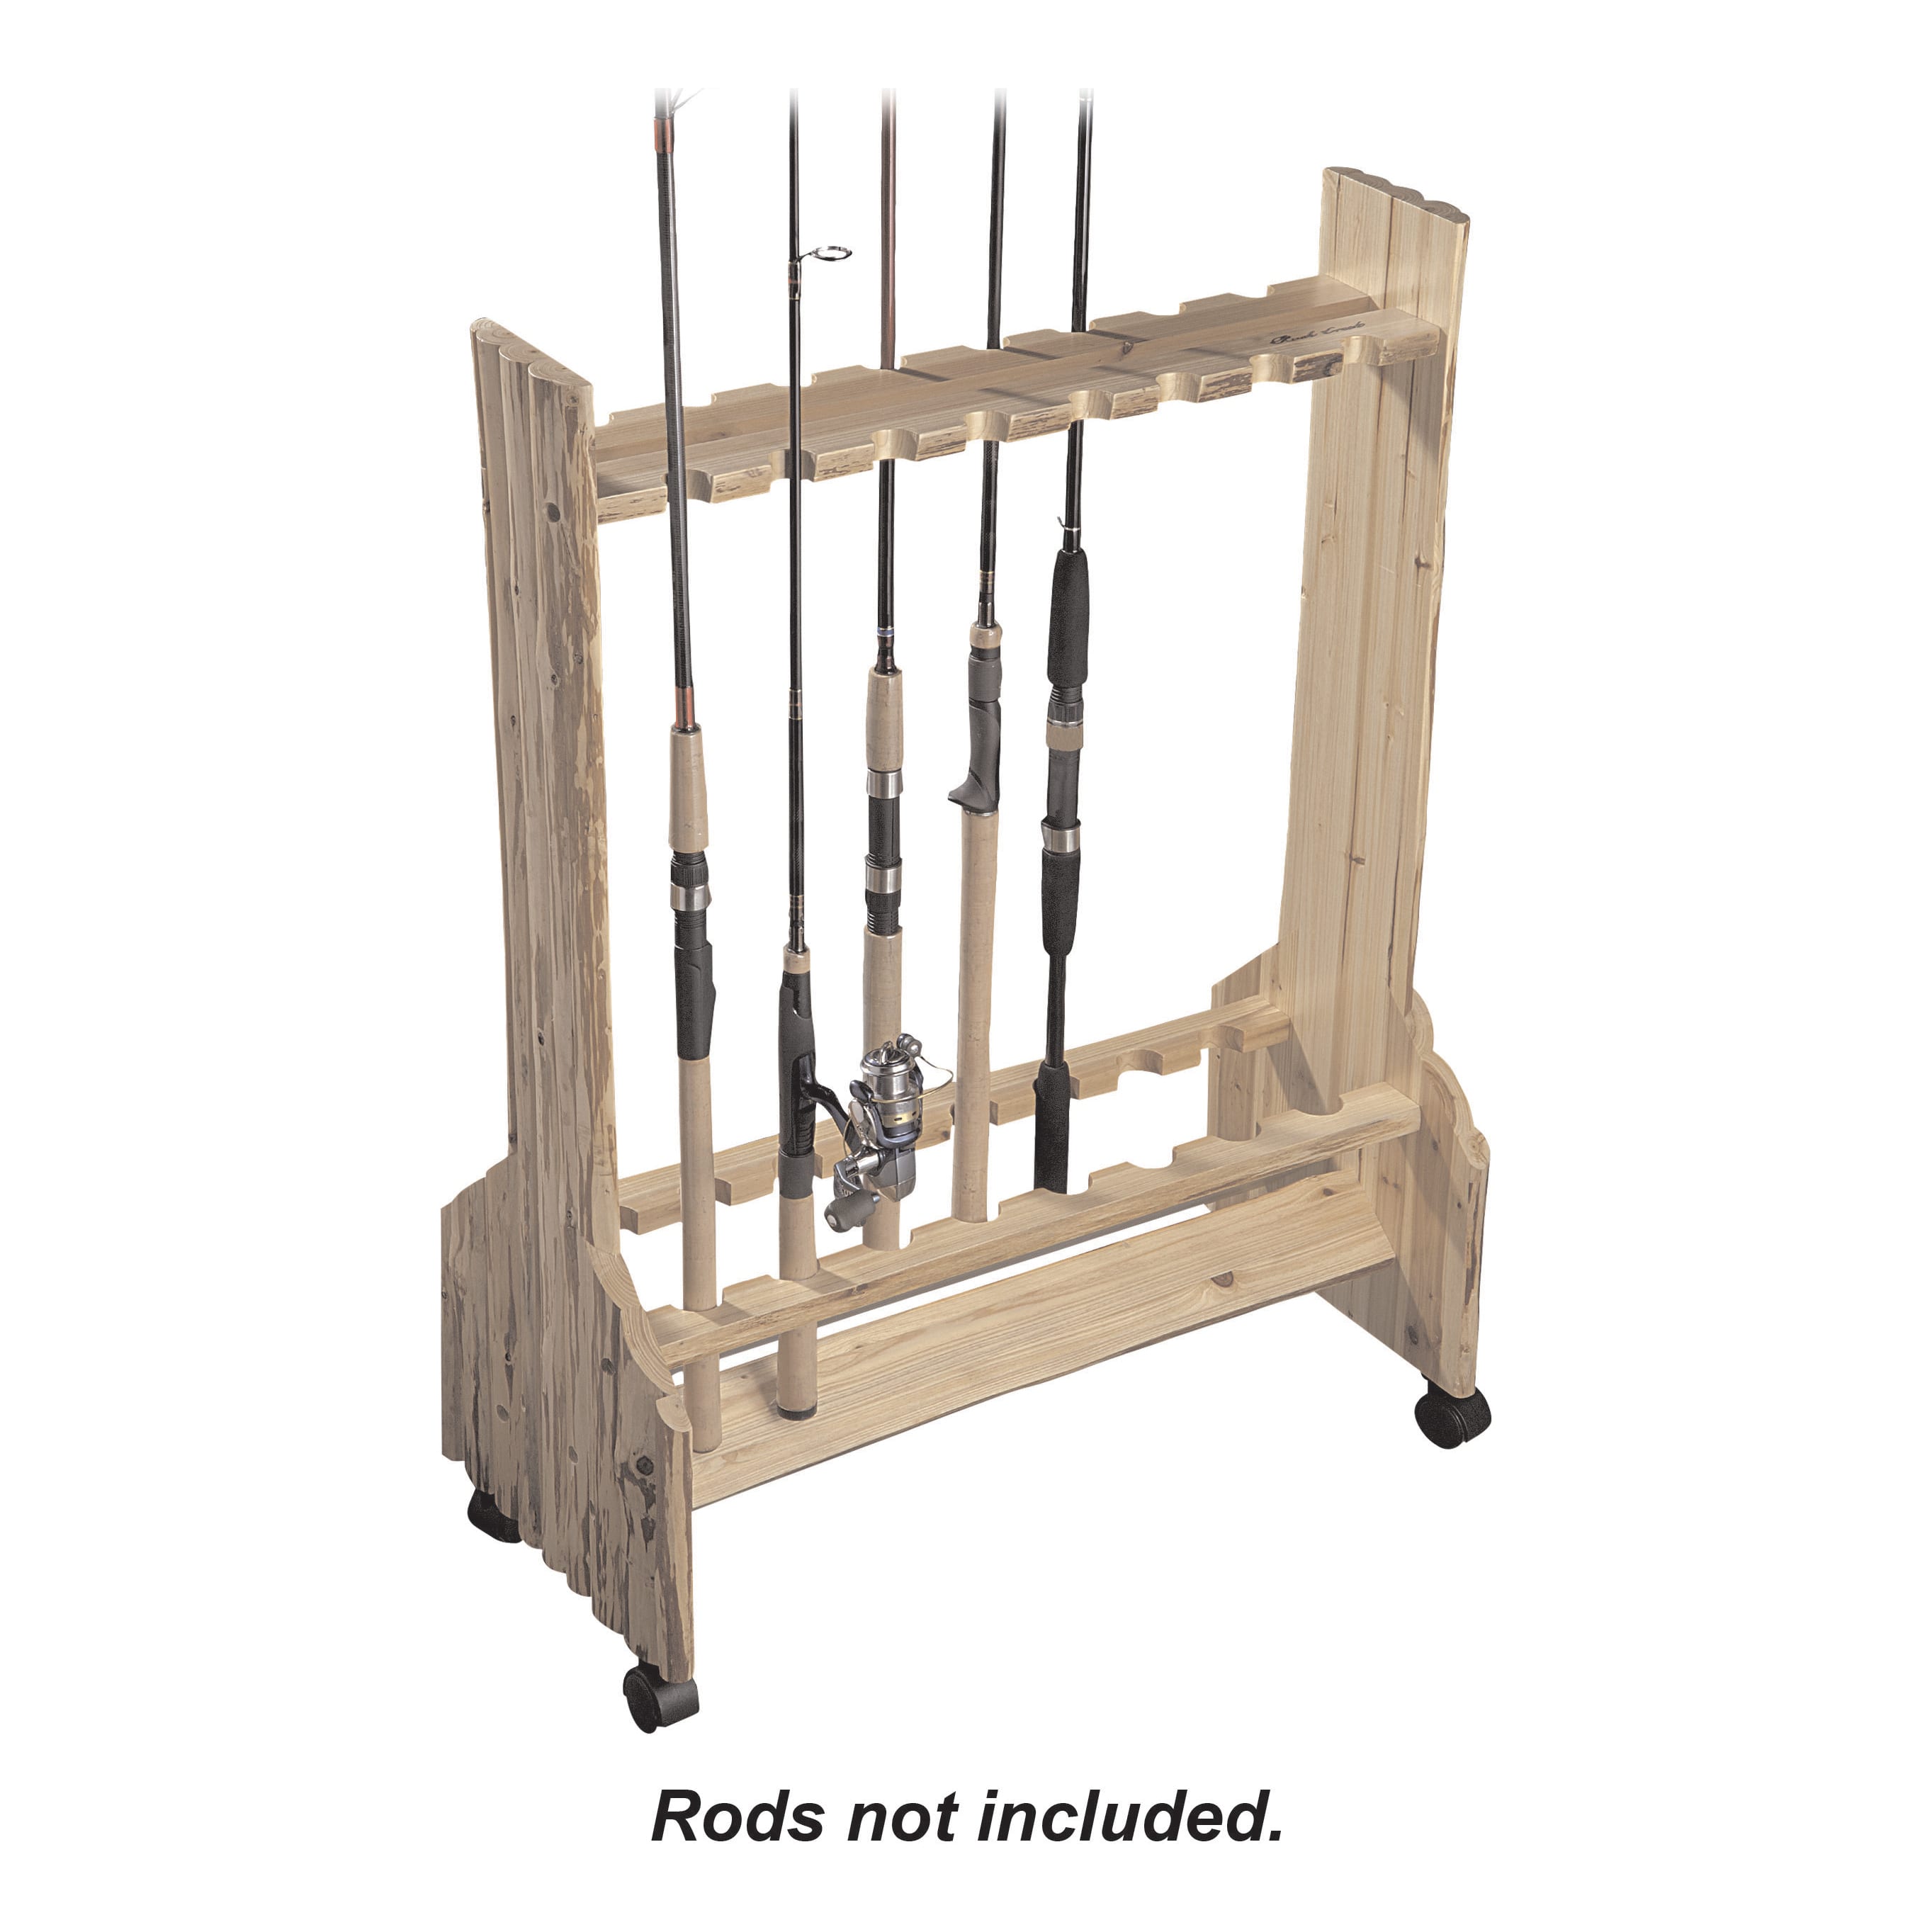 Fishing Rod Storage: Fishing Rod Rack For Storing Rods & Reels